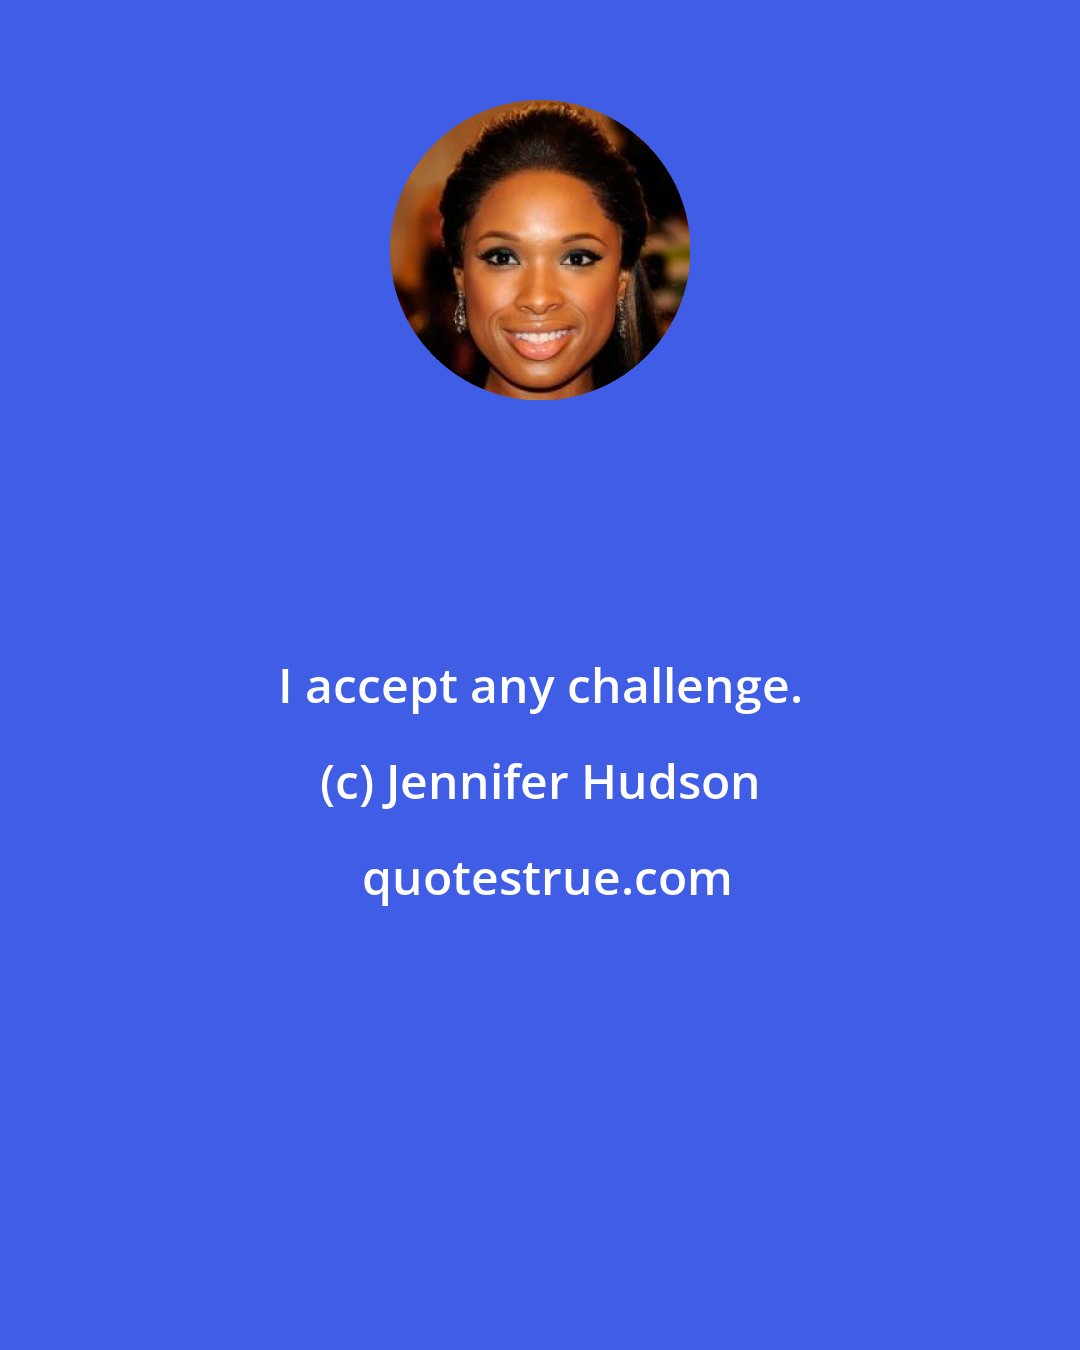 Jennifer Hudson: I accept any challenge.